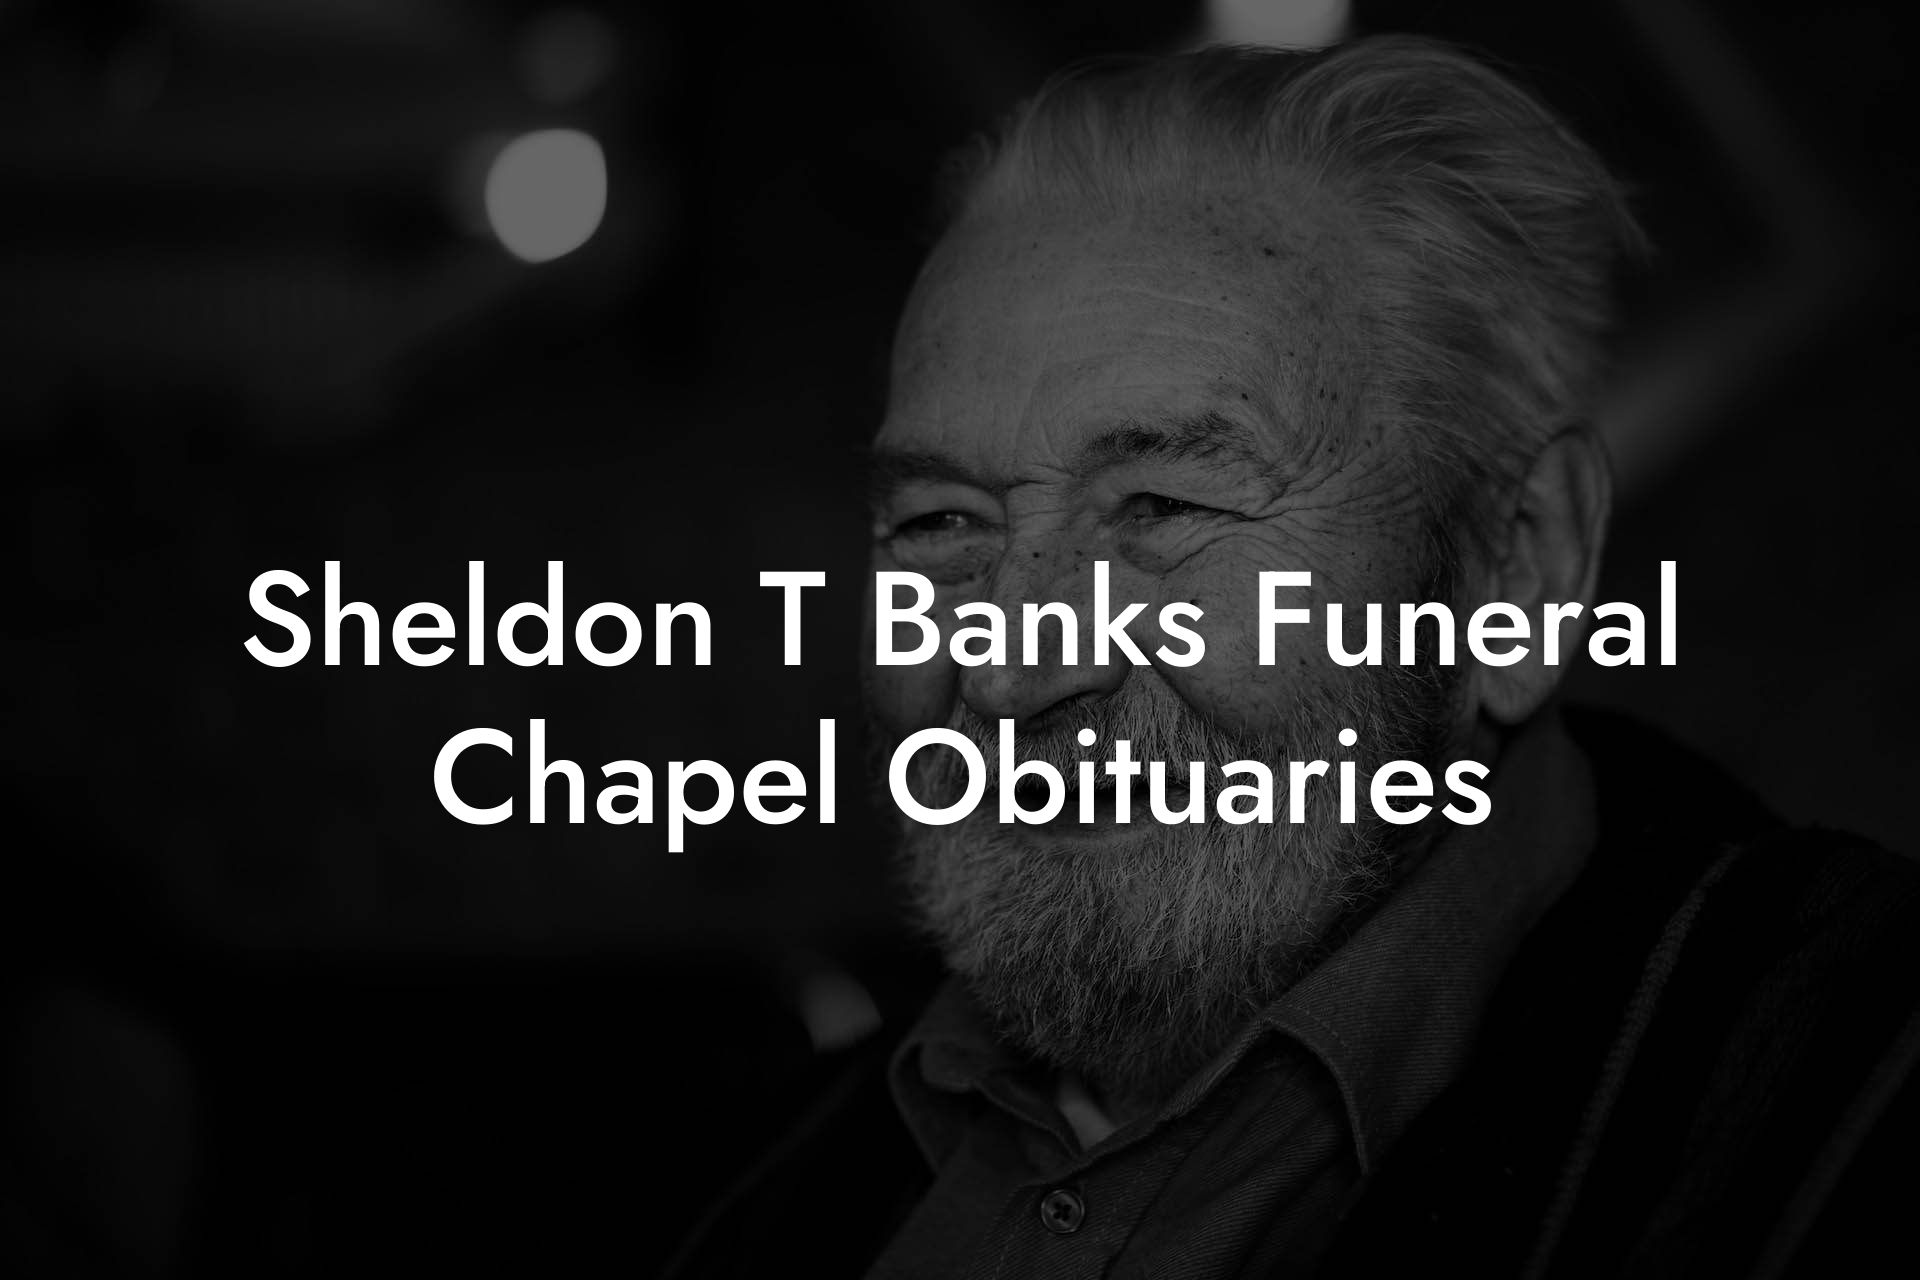 Sheldon T. Banks Funeral Chapel Obituaries